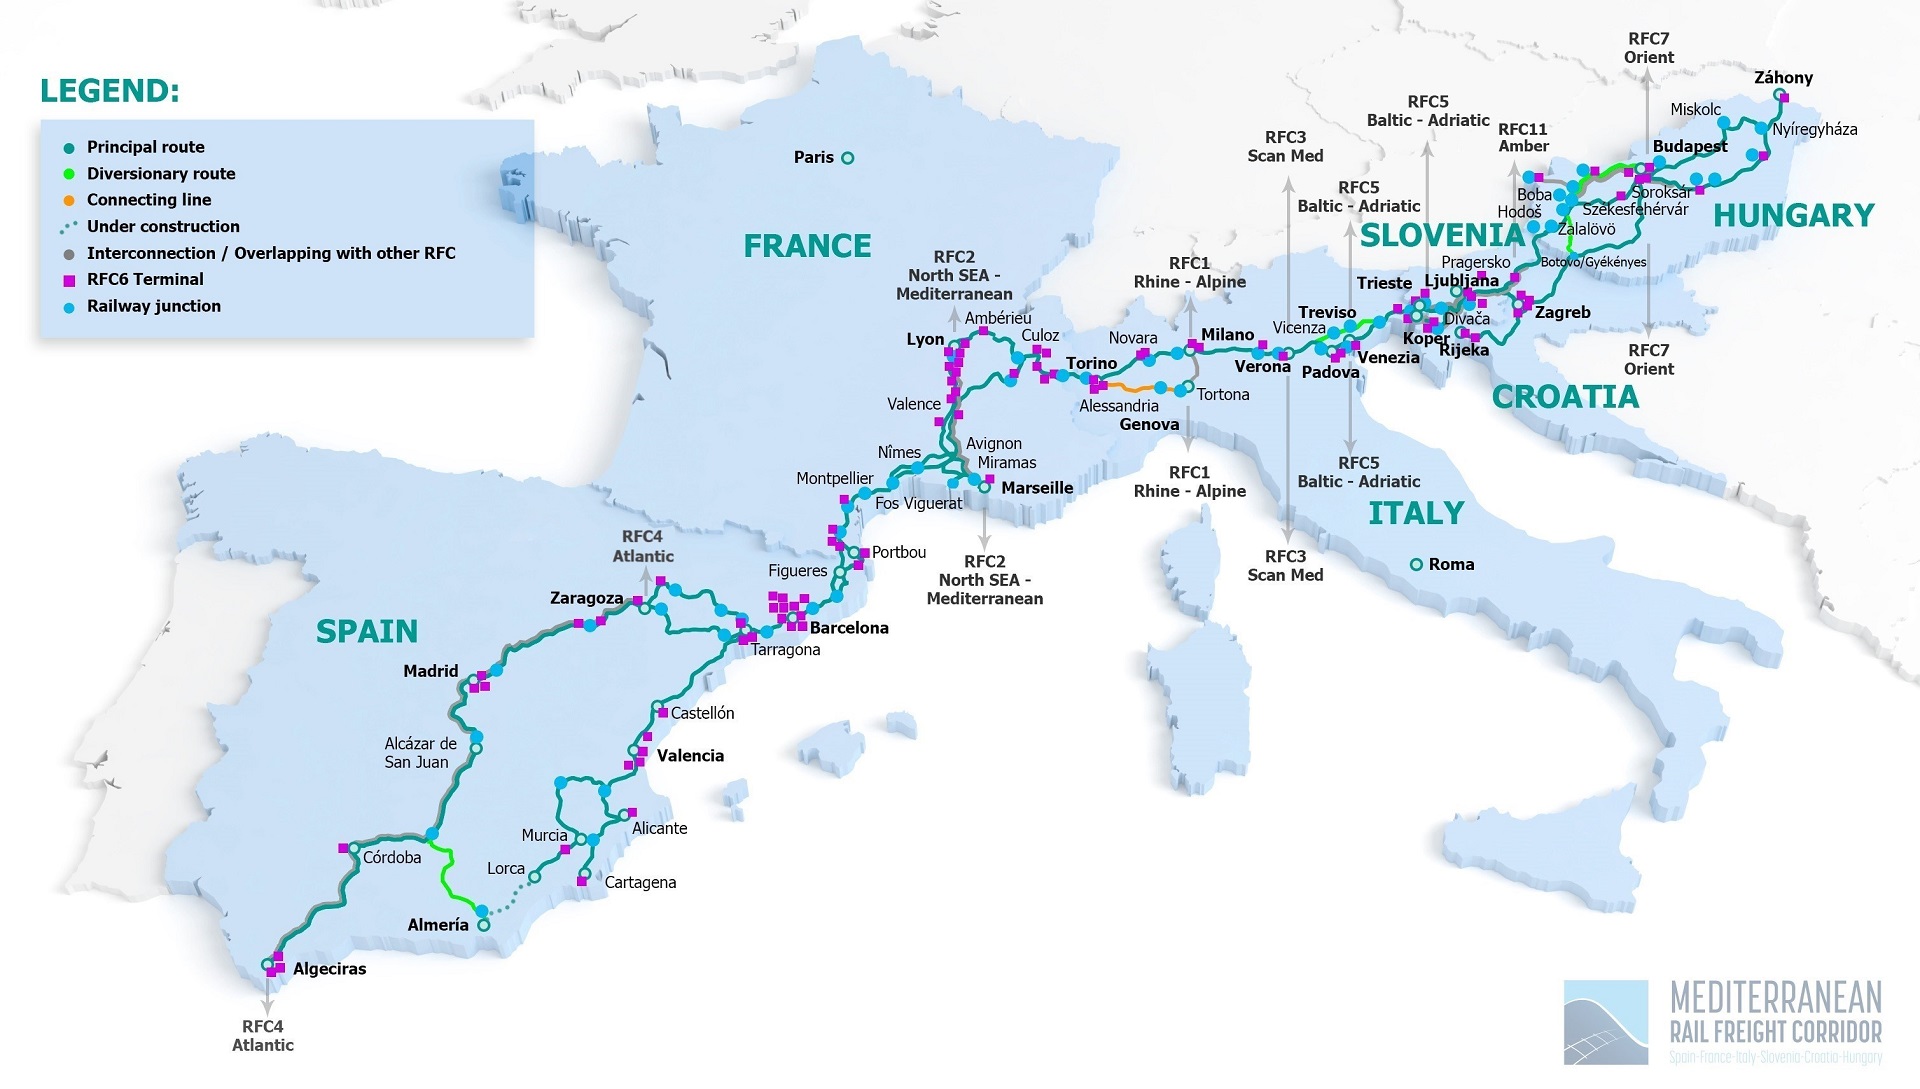 Mediterranean Rail Freight Corridor